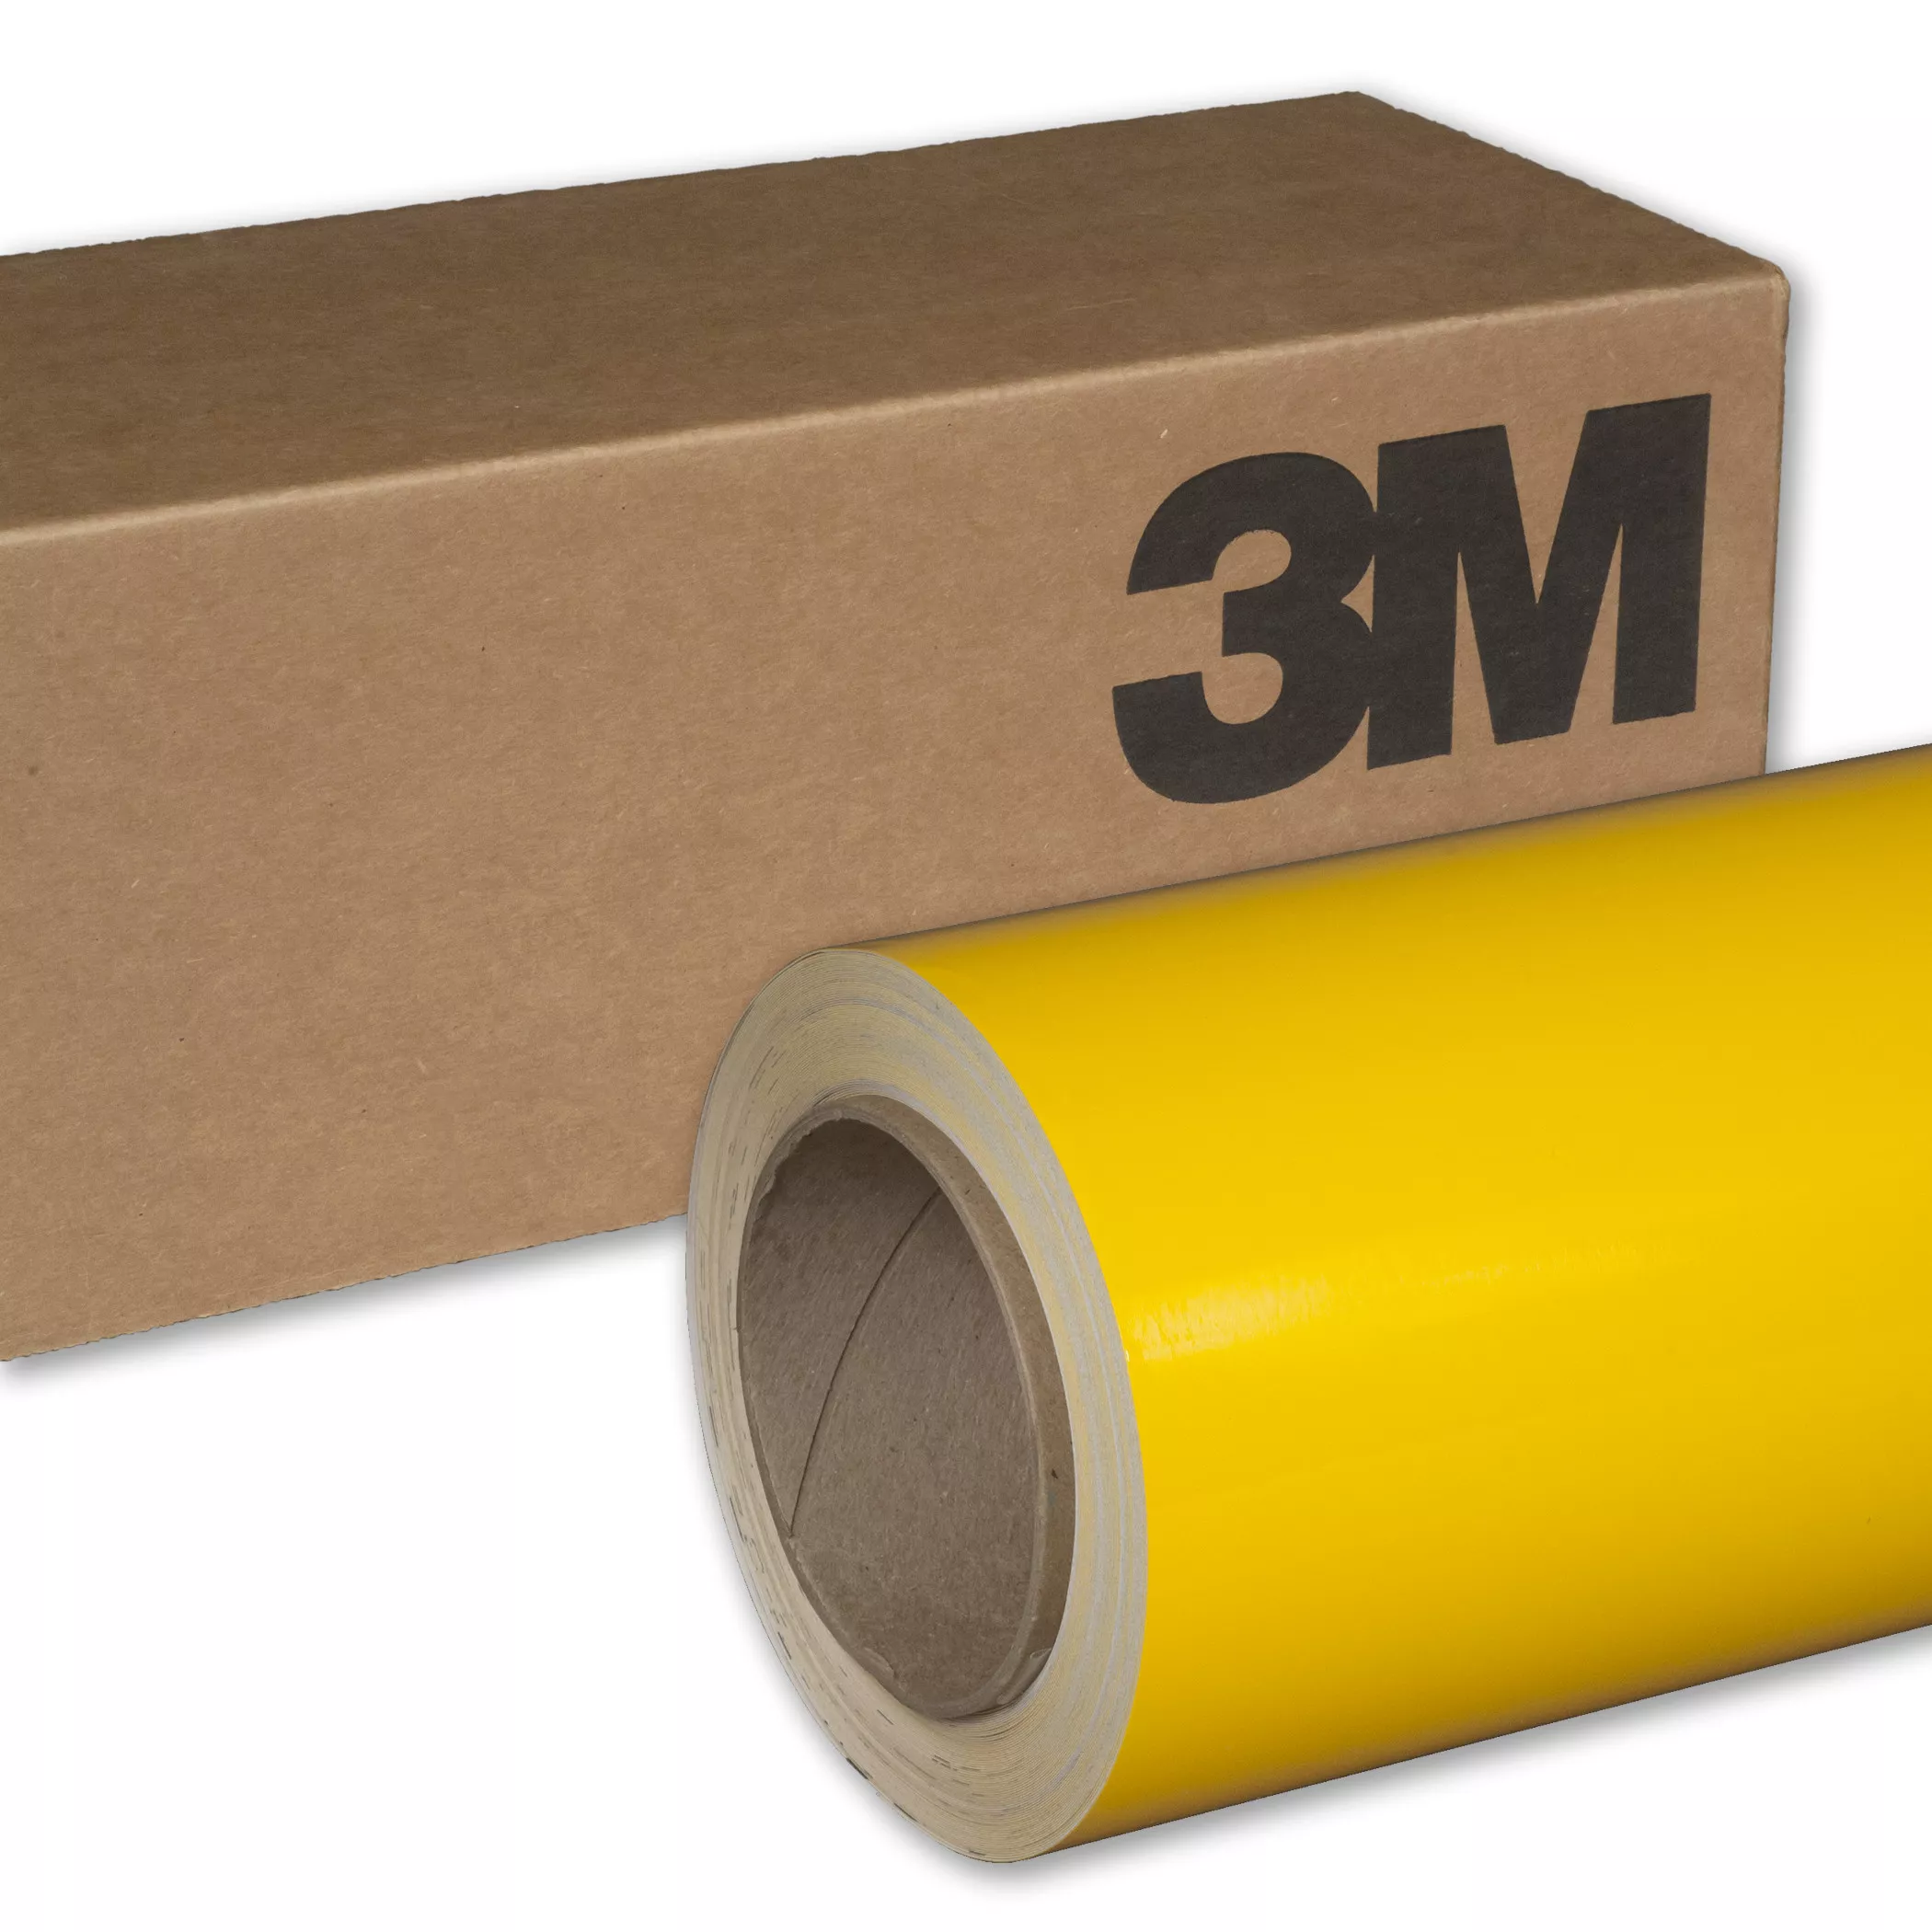 3M™ Wrap Film Series 1080-G25, Gloss Sunflower, 60 in x 10 yd